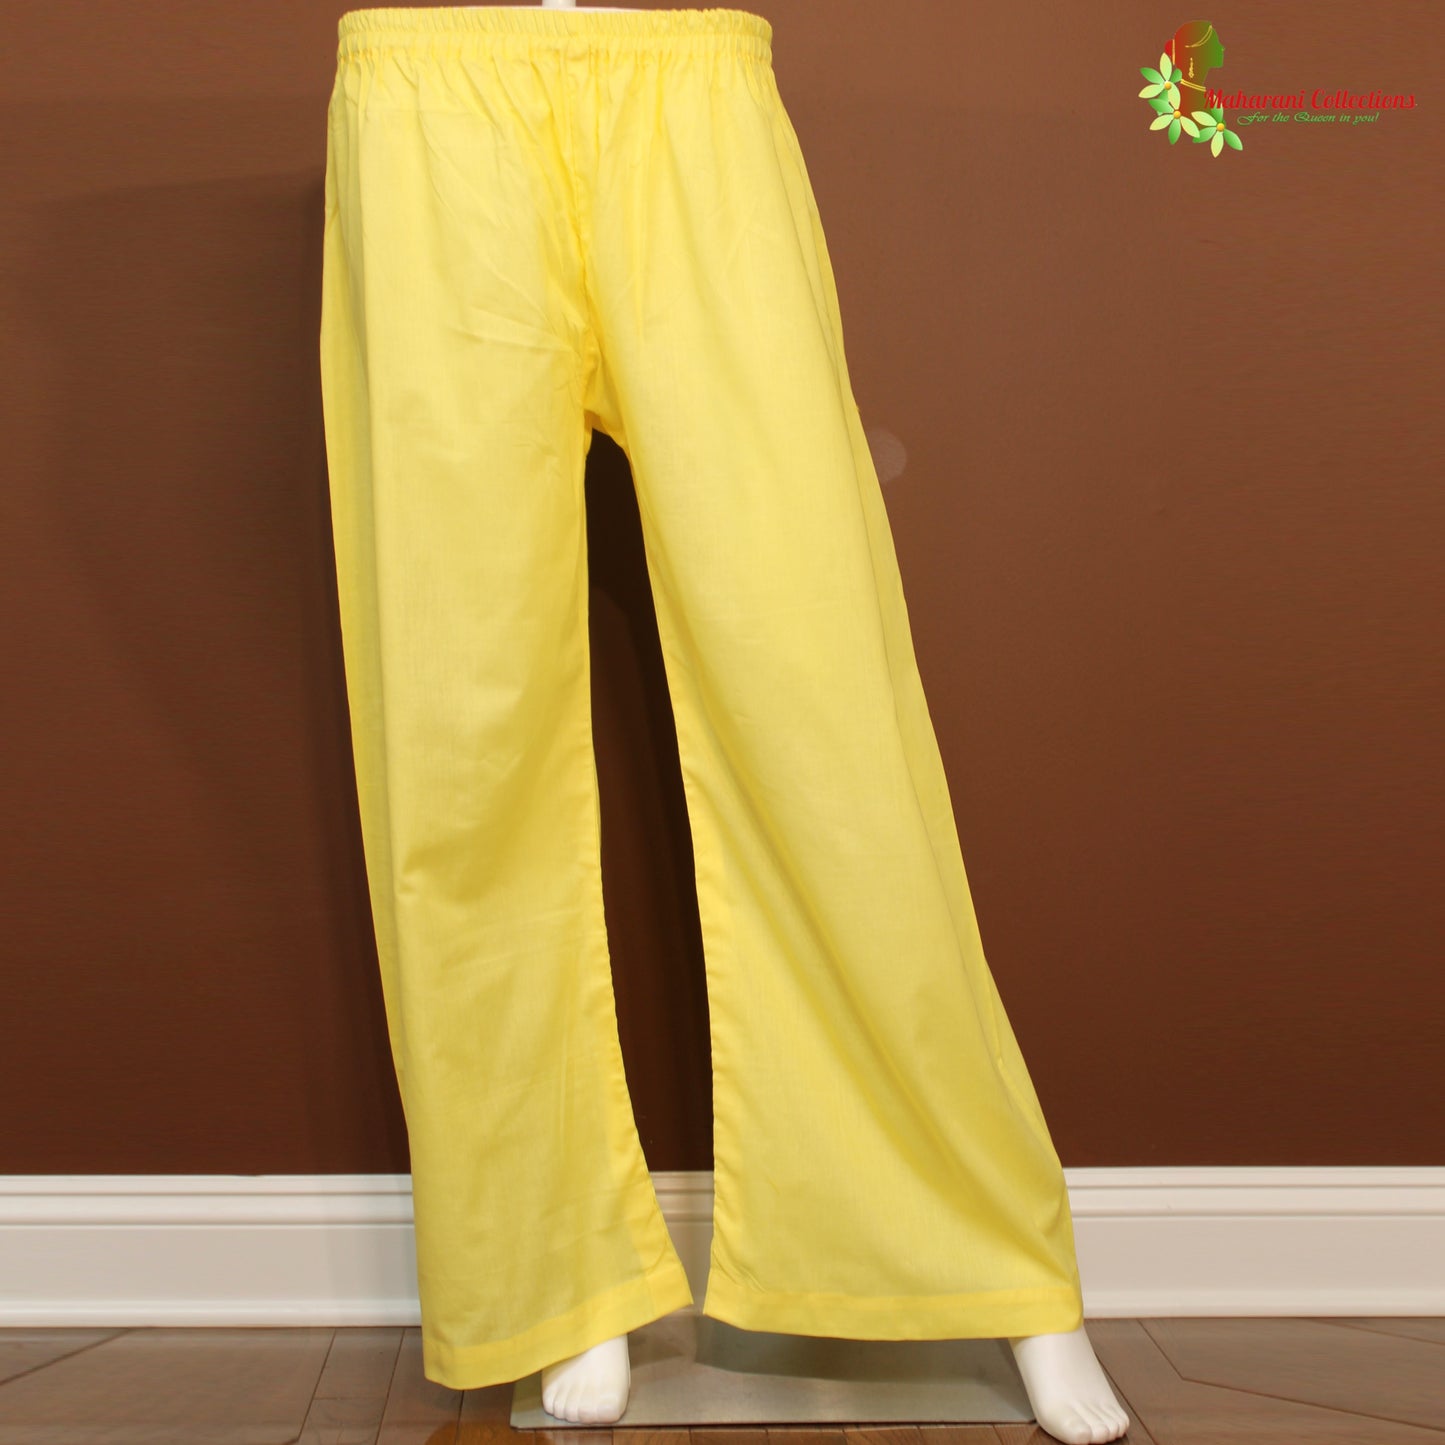 Maharani's Designer Silk Palazzo Suit Set - Yellow (M)